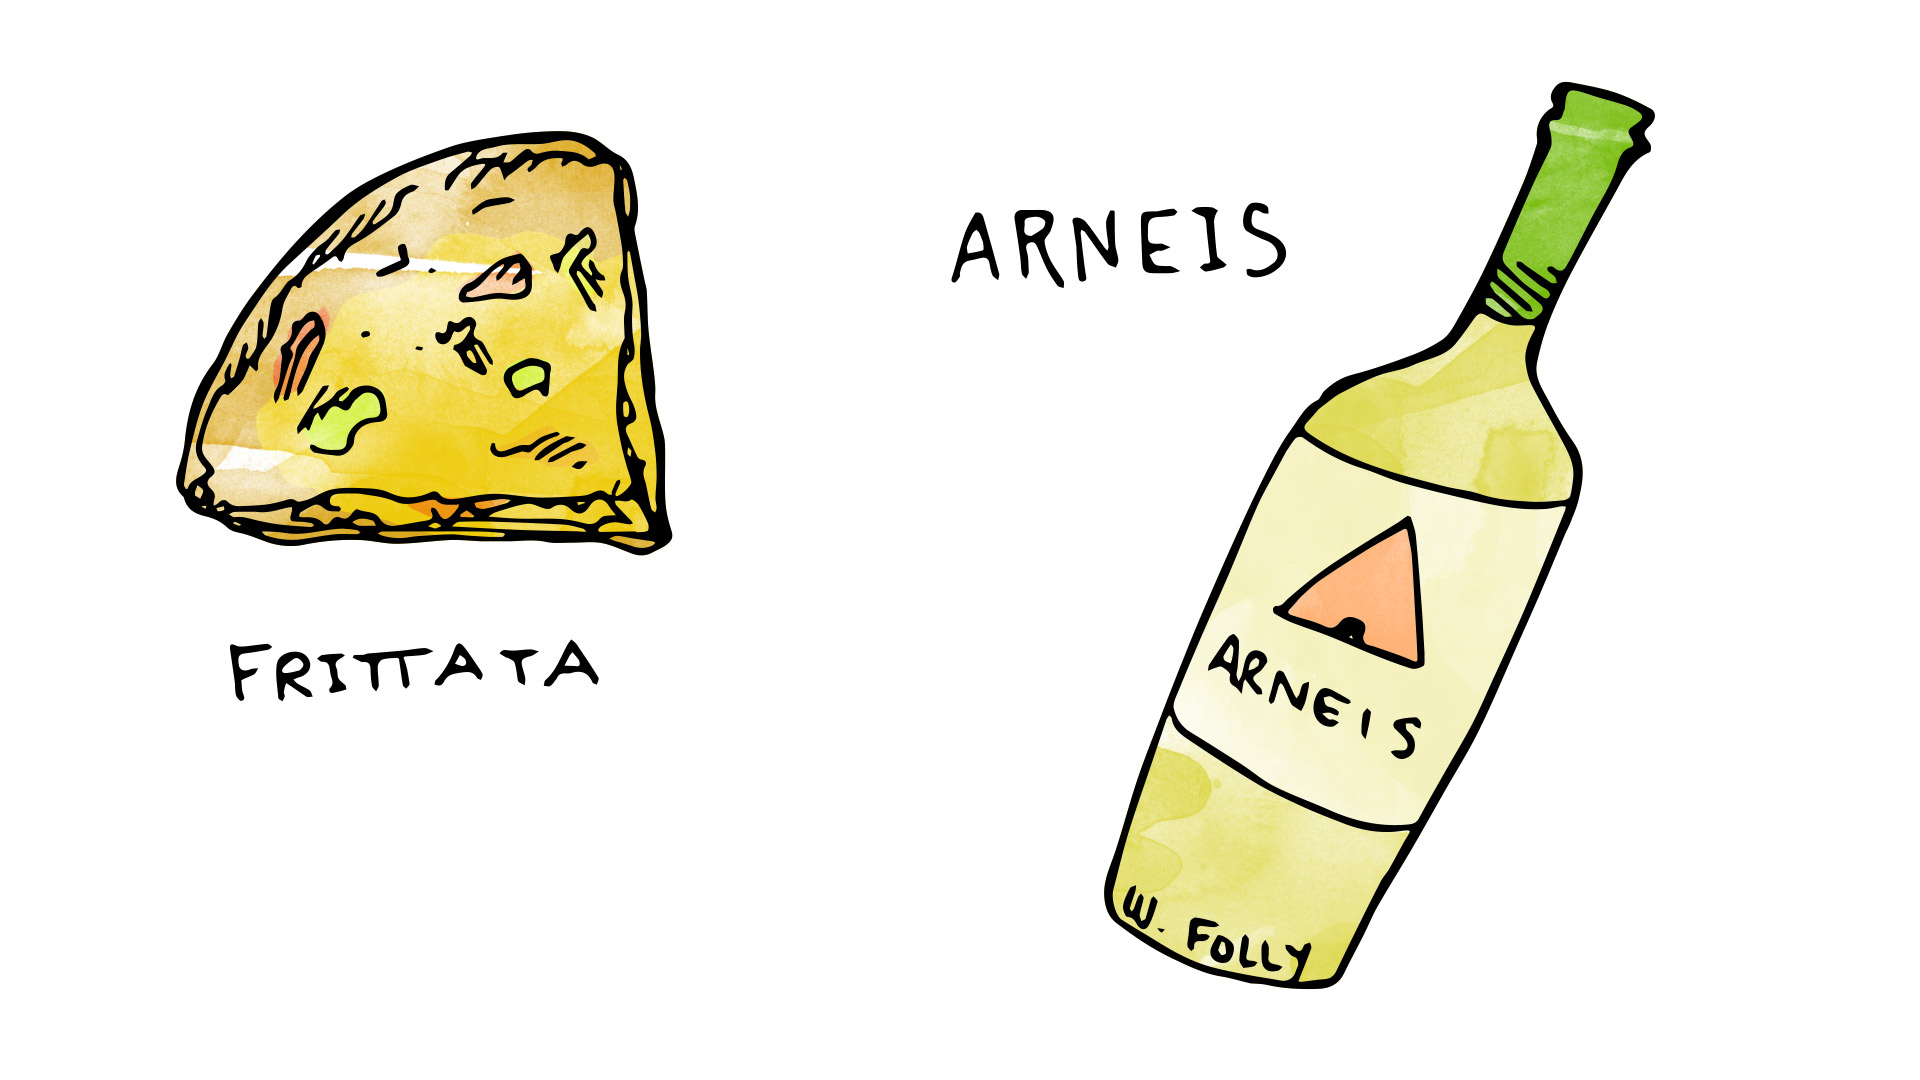 Frittata Italian style pairing with Arneis wine illustration by Wine Folly